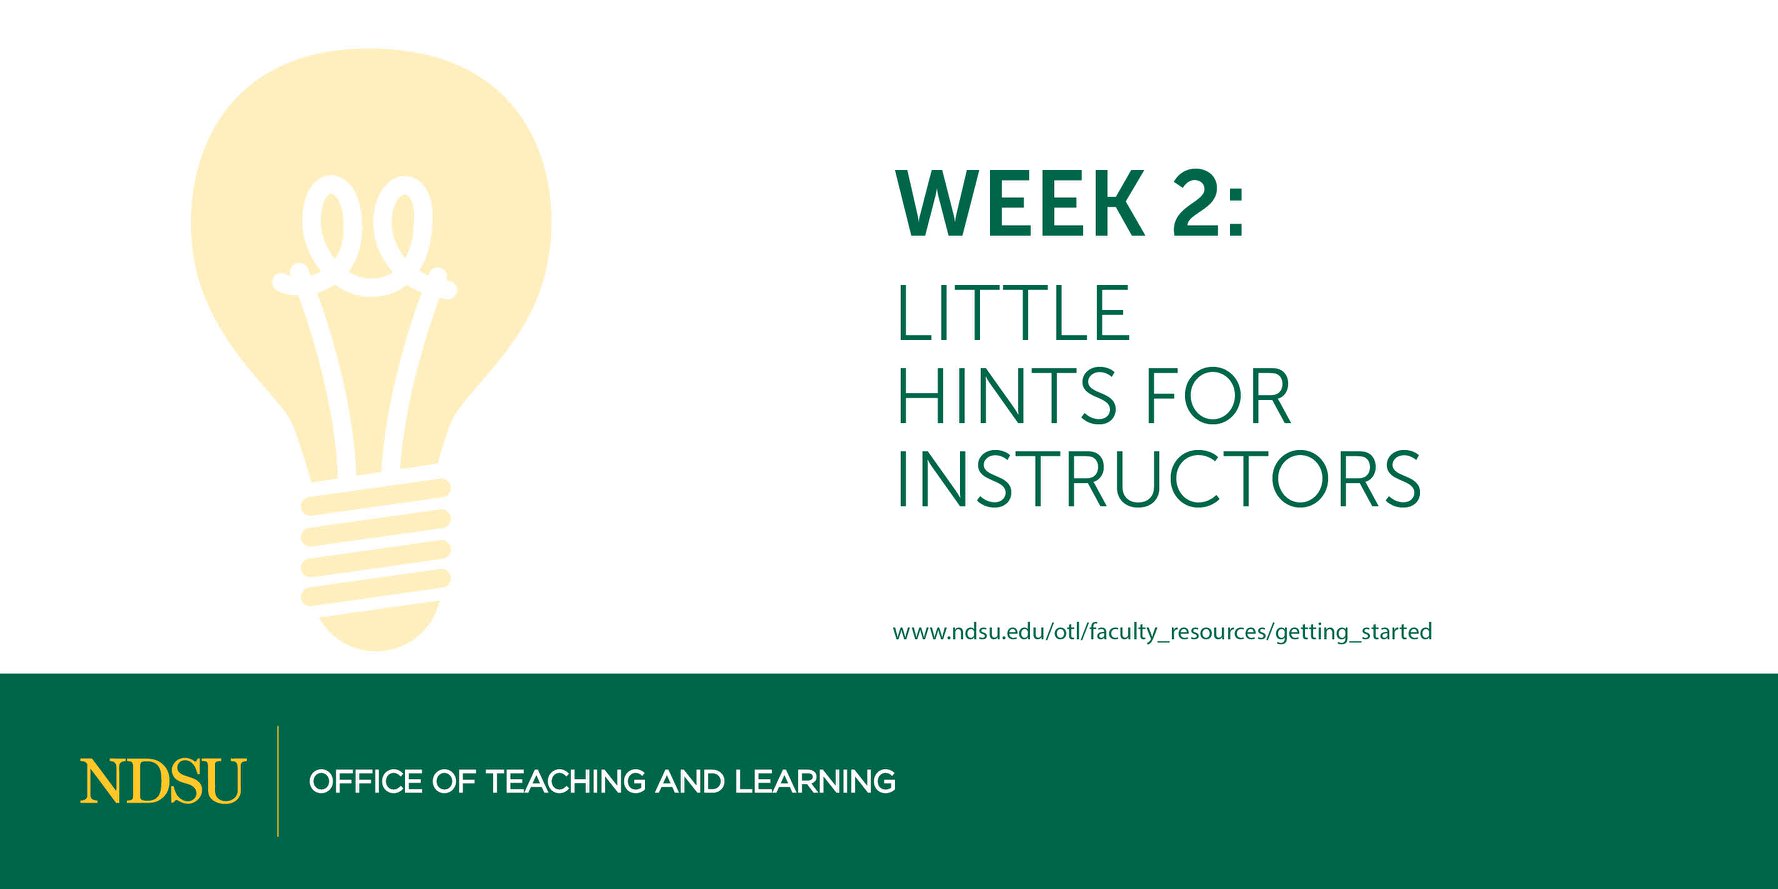 Week 2 Little Hints for Instructors